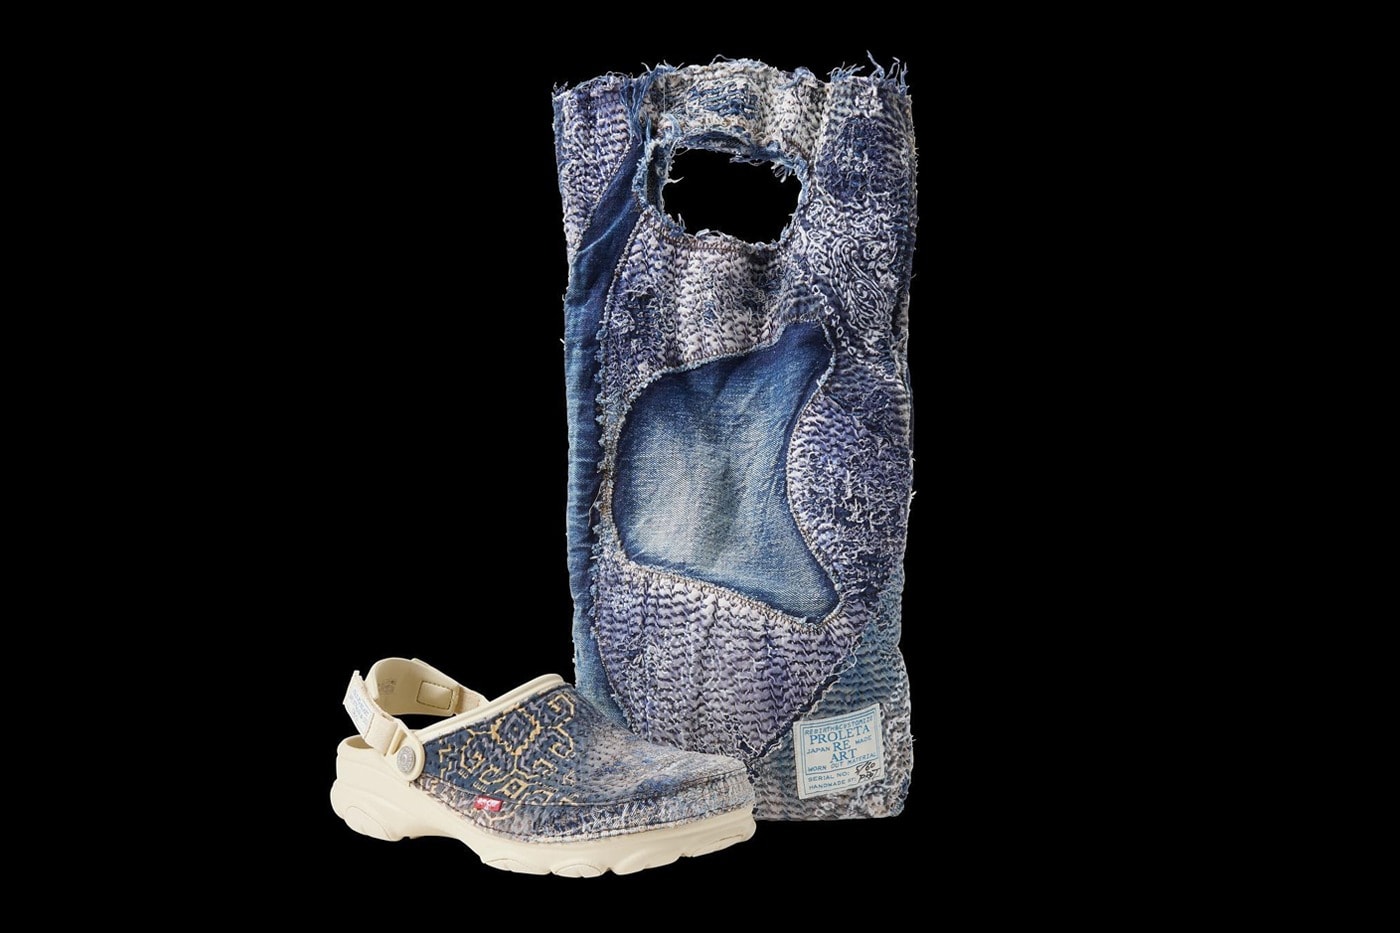 PROLETA RE ART 攜手 Levi's、Crocs 打造特殊鞋款、鞋袋系列